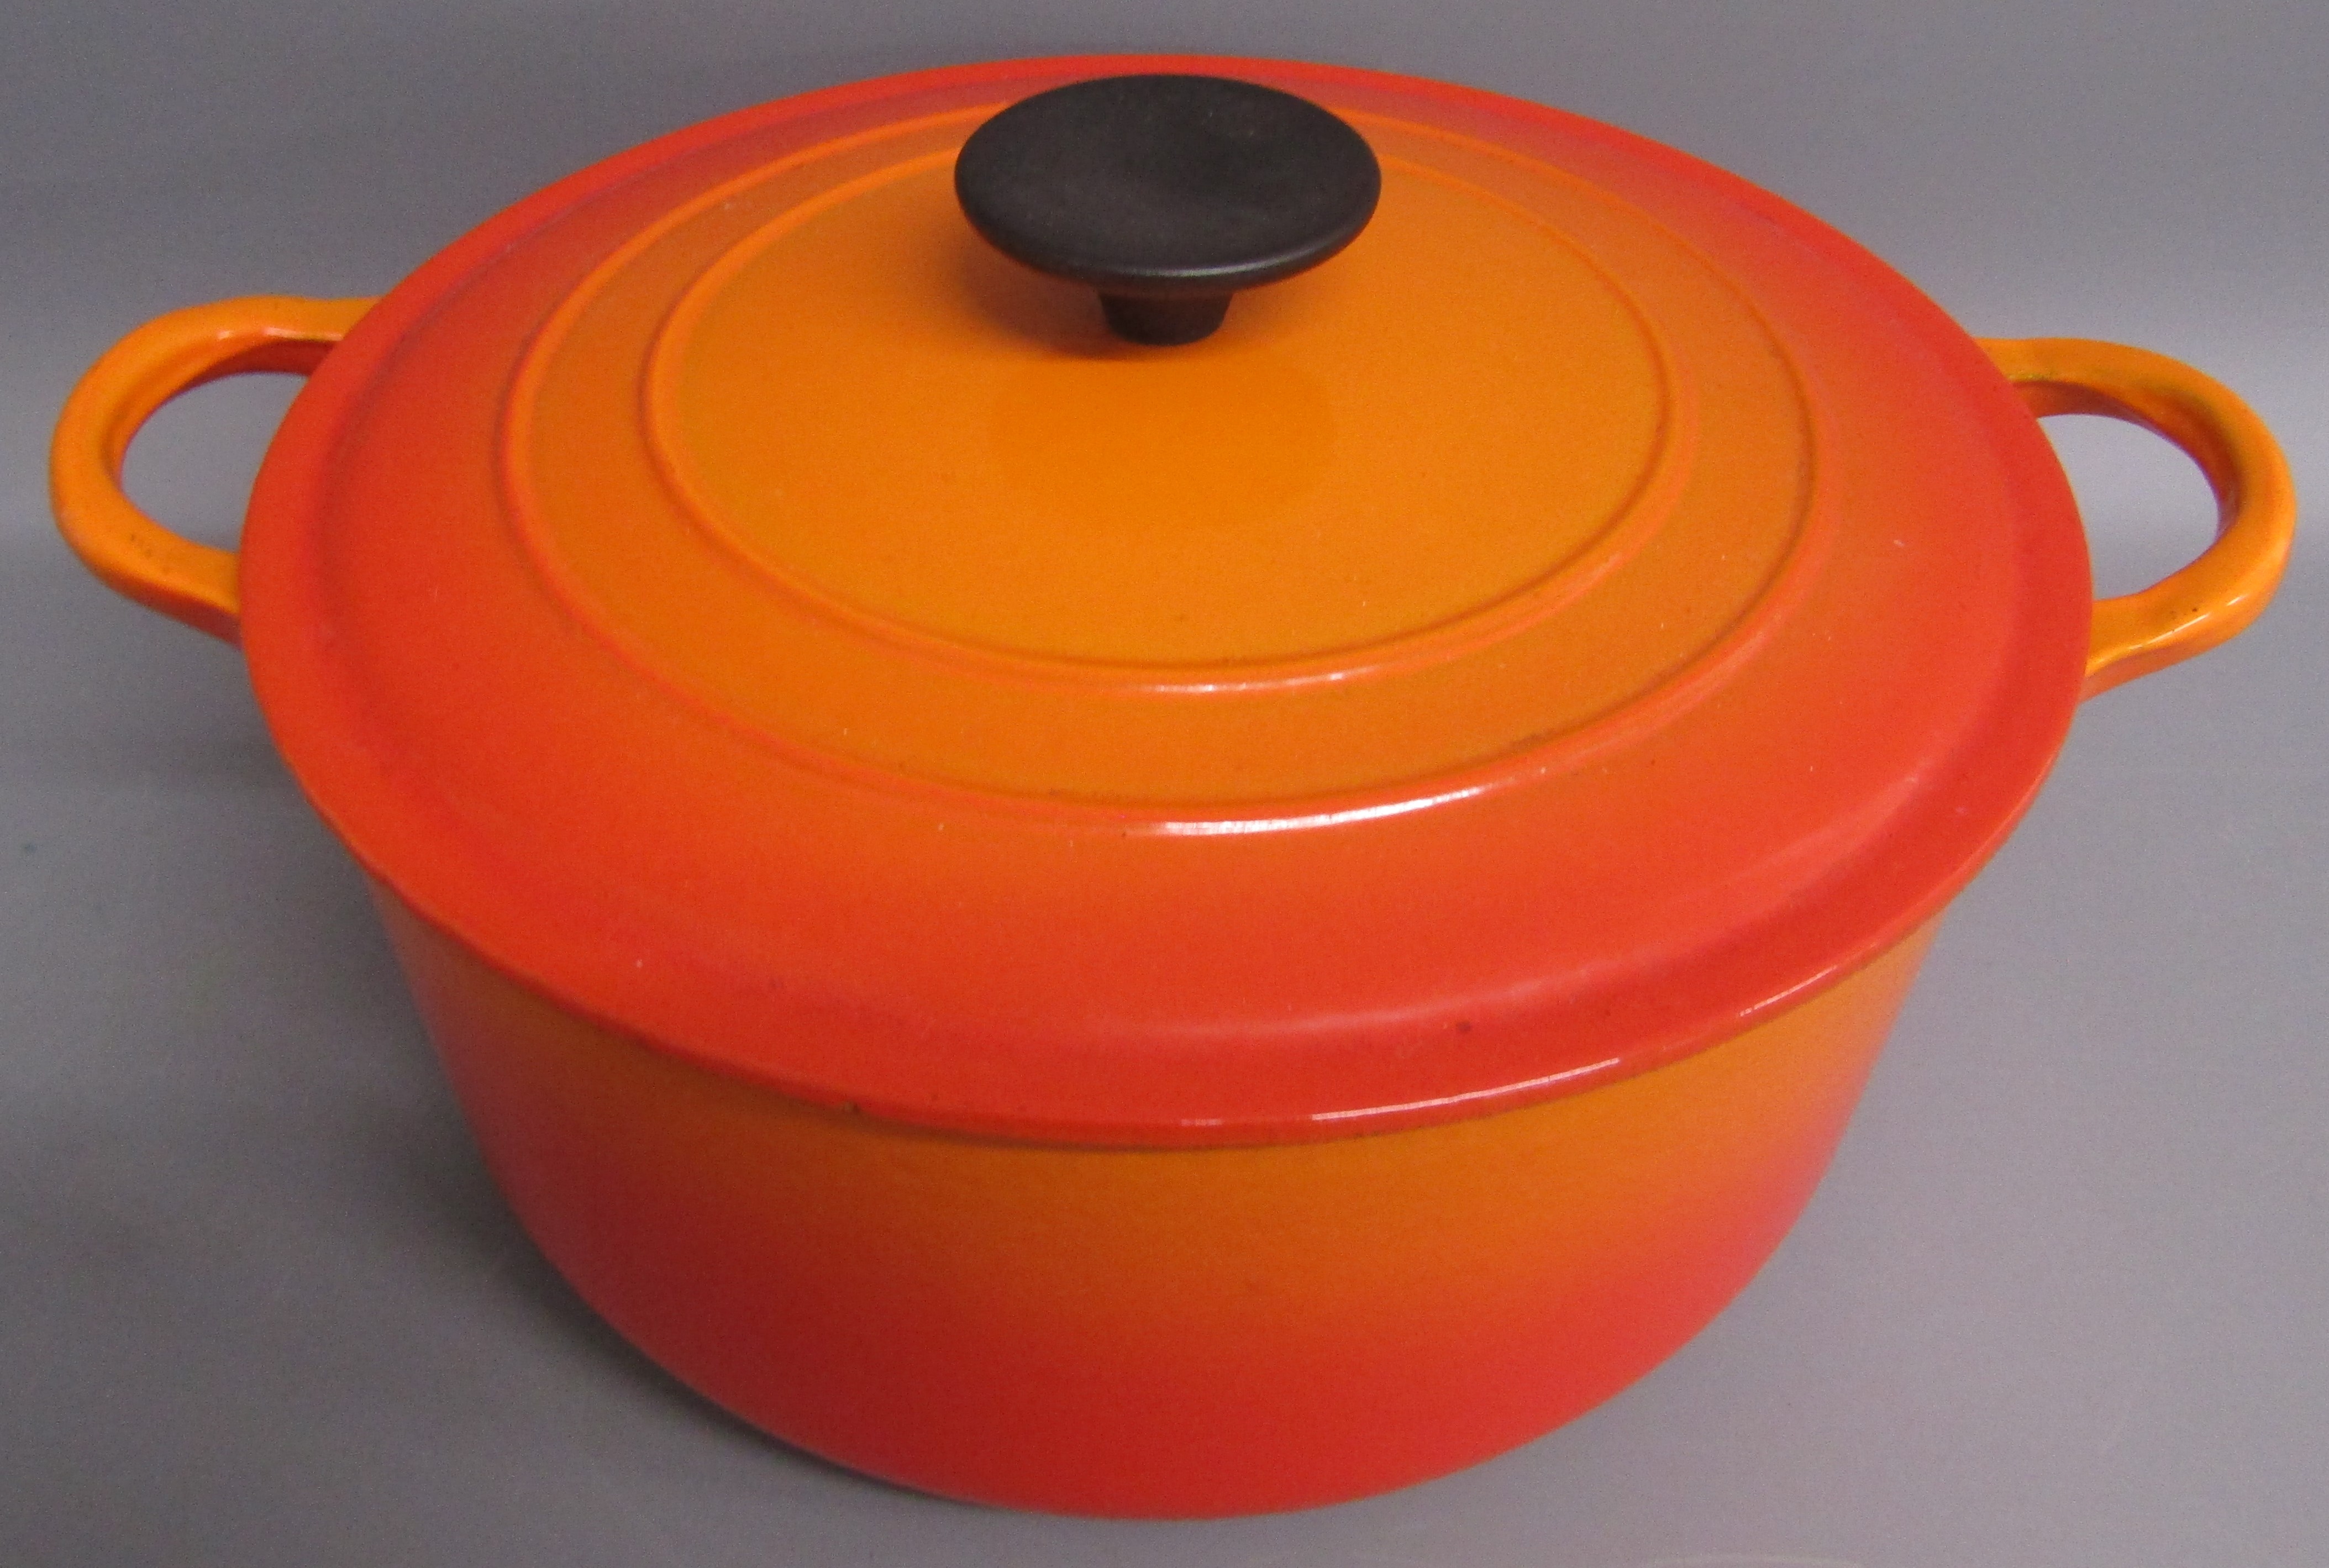 Le Creuset Volcanic orange casserole dish 'E' - approx. 24.5cm dia